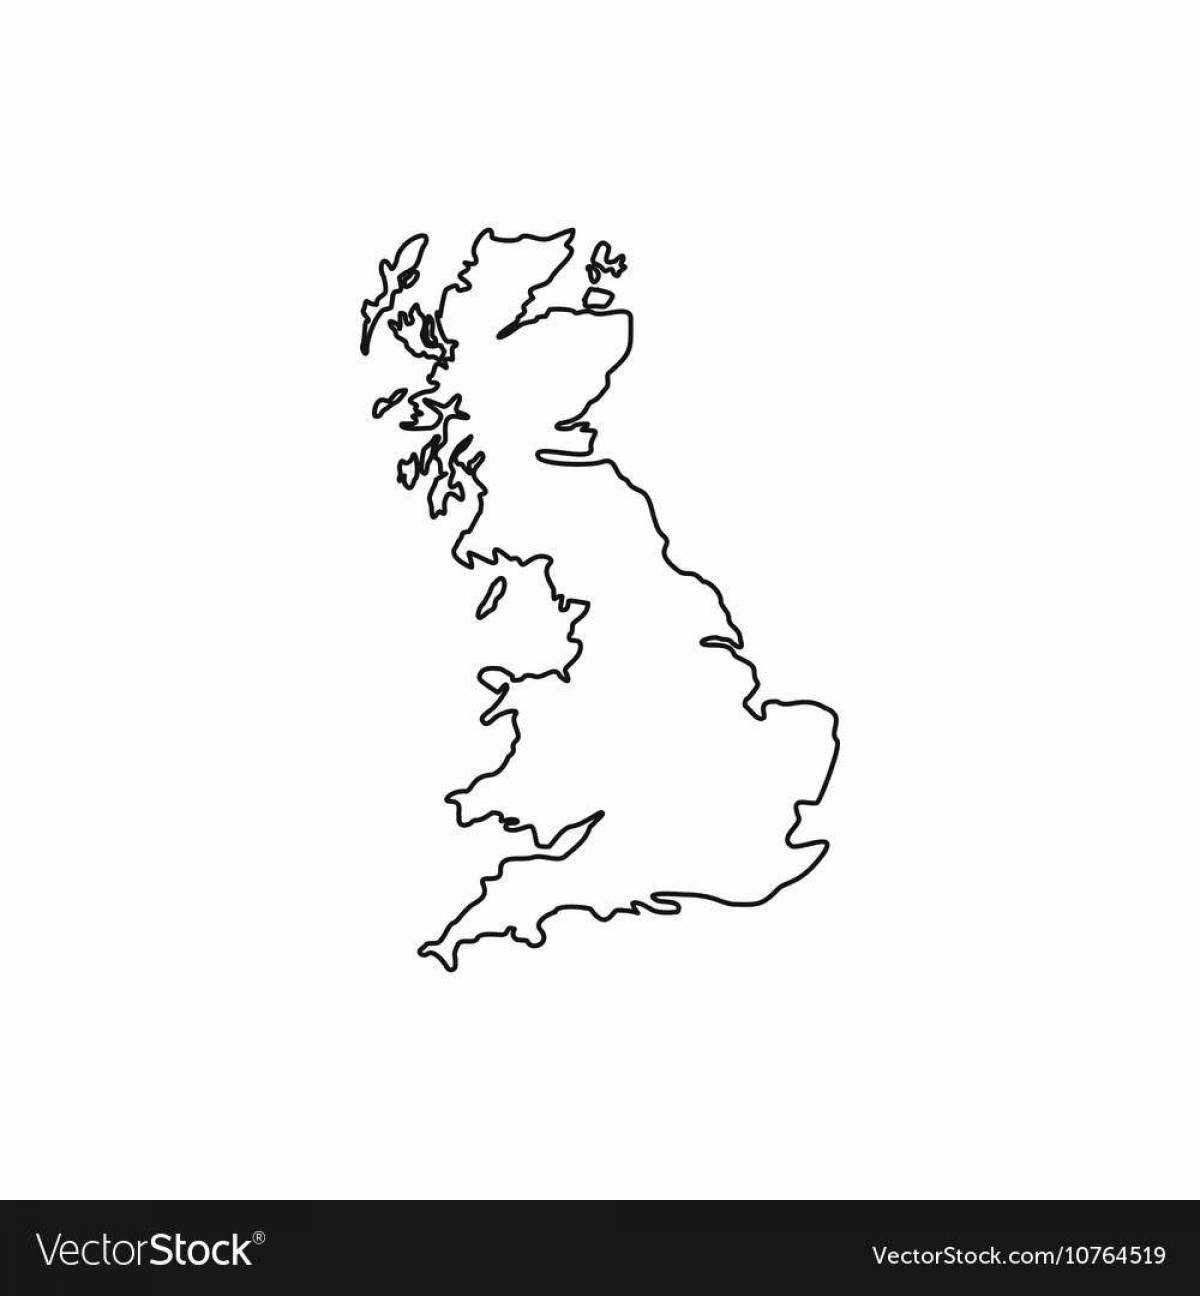 UK map #16